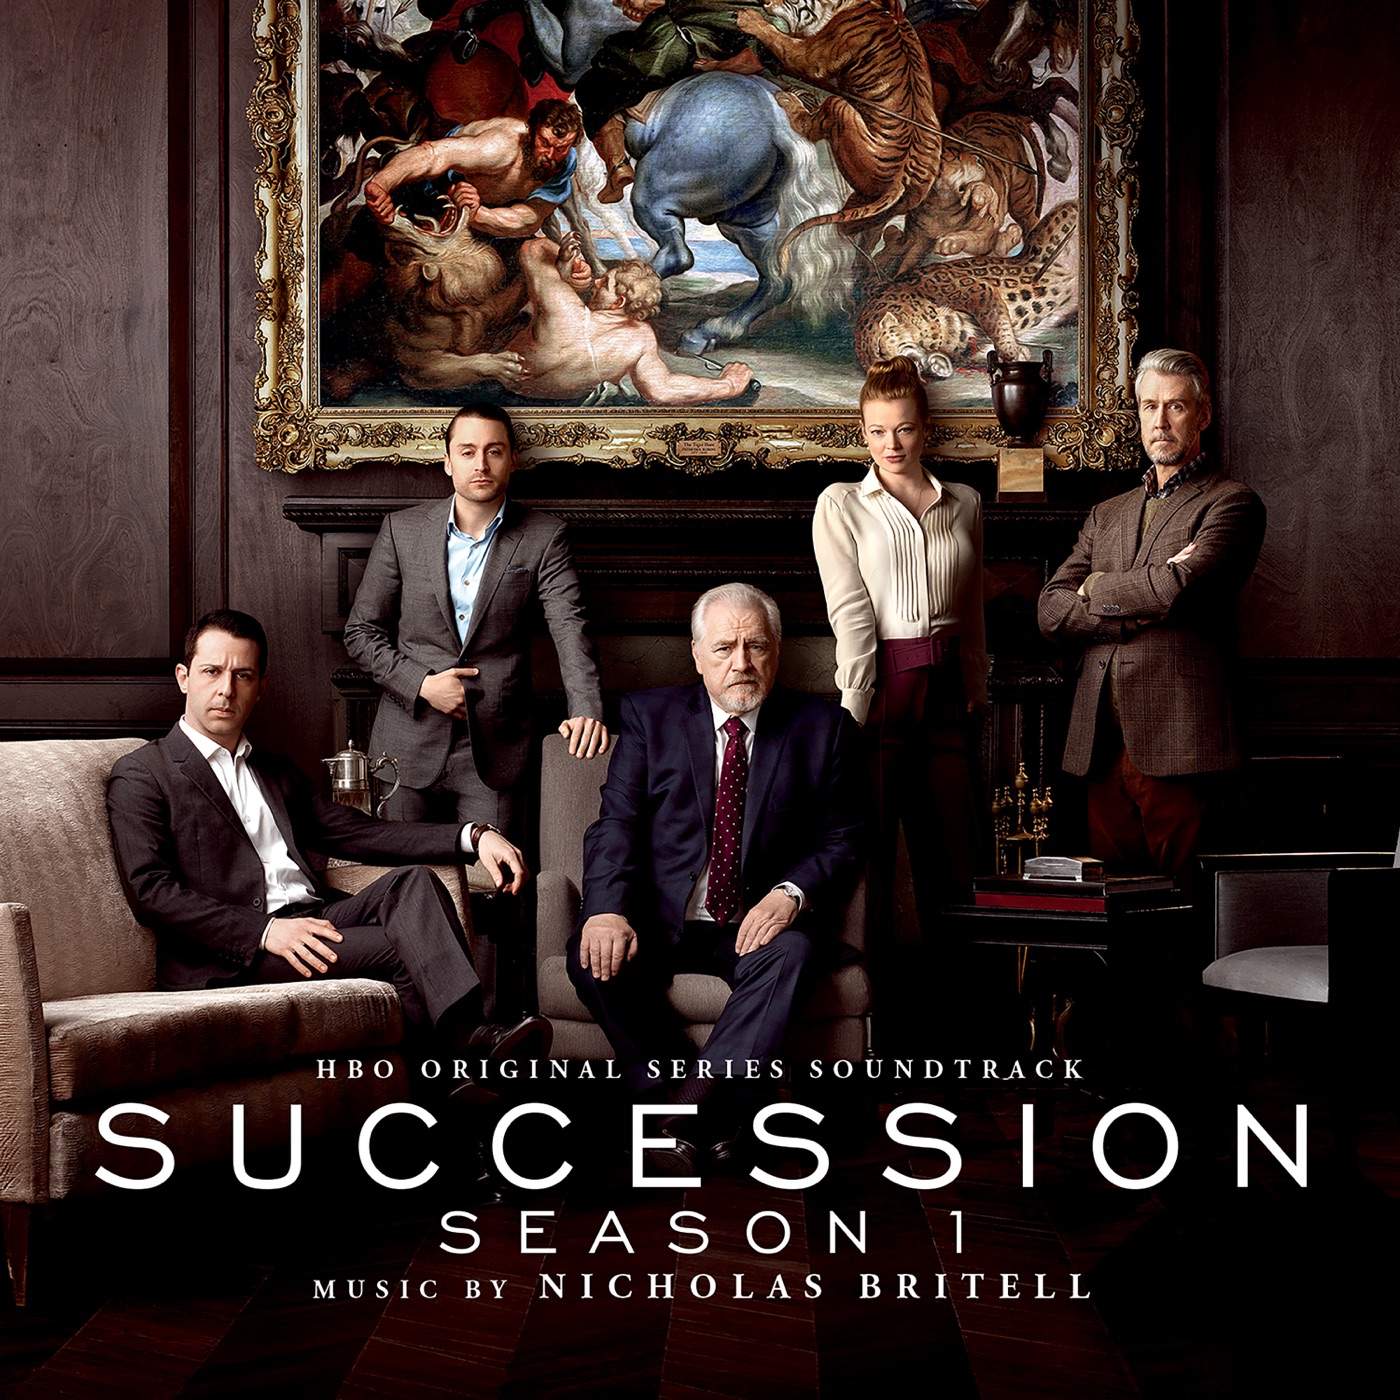 Succession: Season 1 (HBO Original Series Soundtrack) by Nicholas Britell, Succession: Season 1 (HBO Original Series Soundtrack)